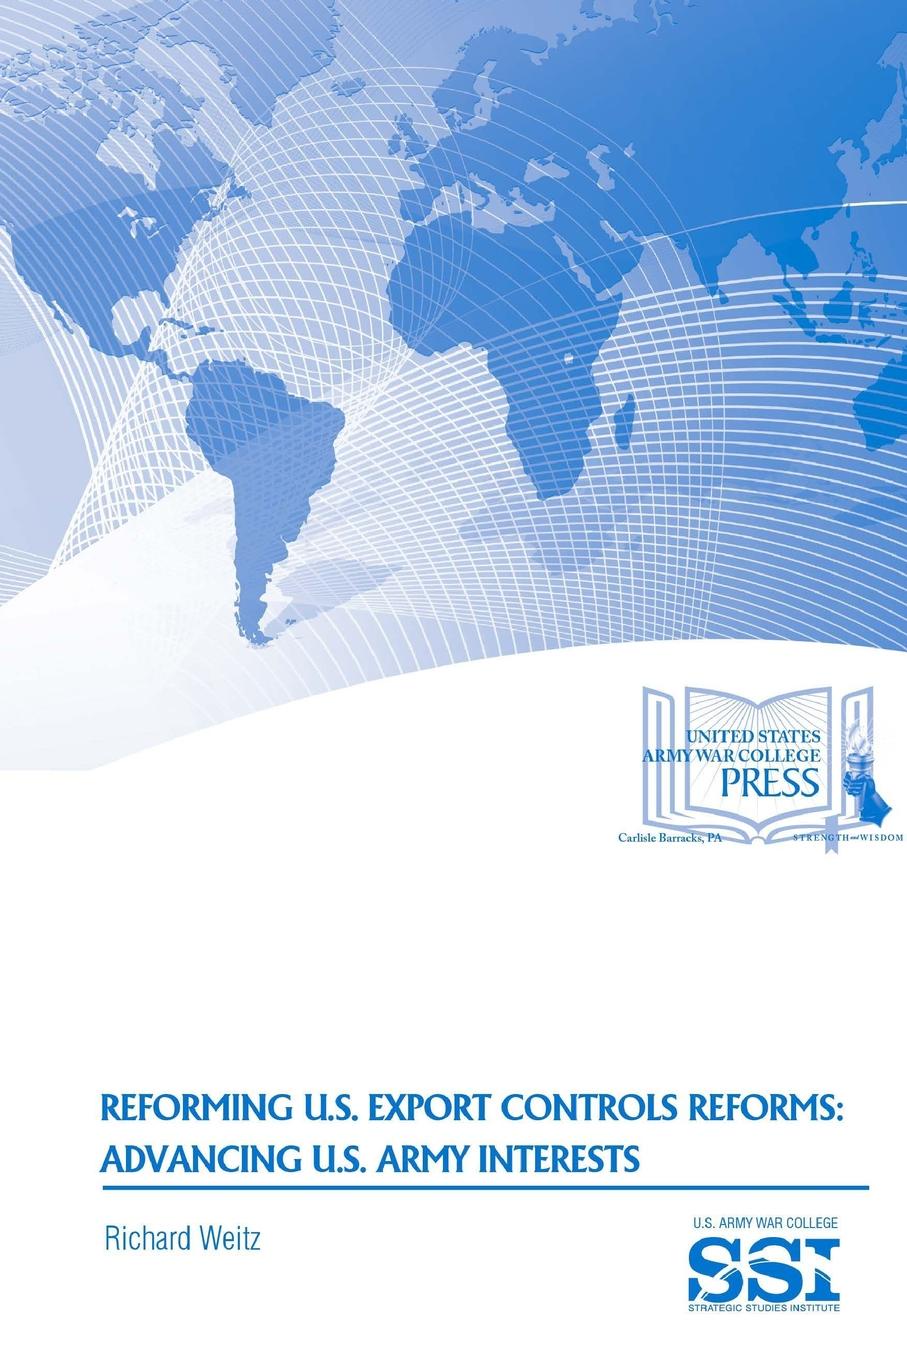 Reforming U.S. Export Controls Reforms. Advancing U.S. Army Interests